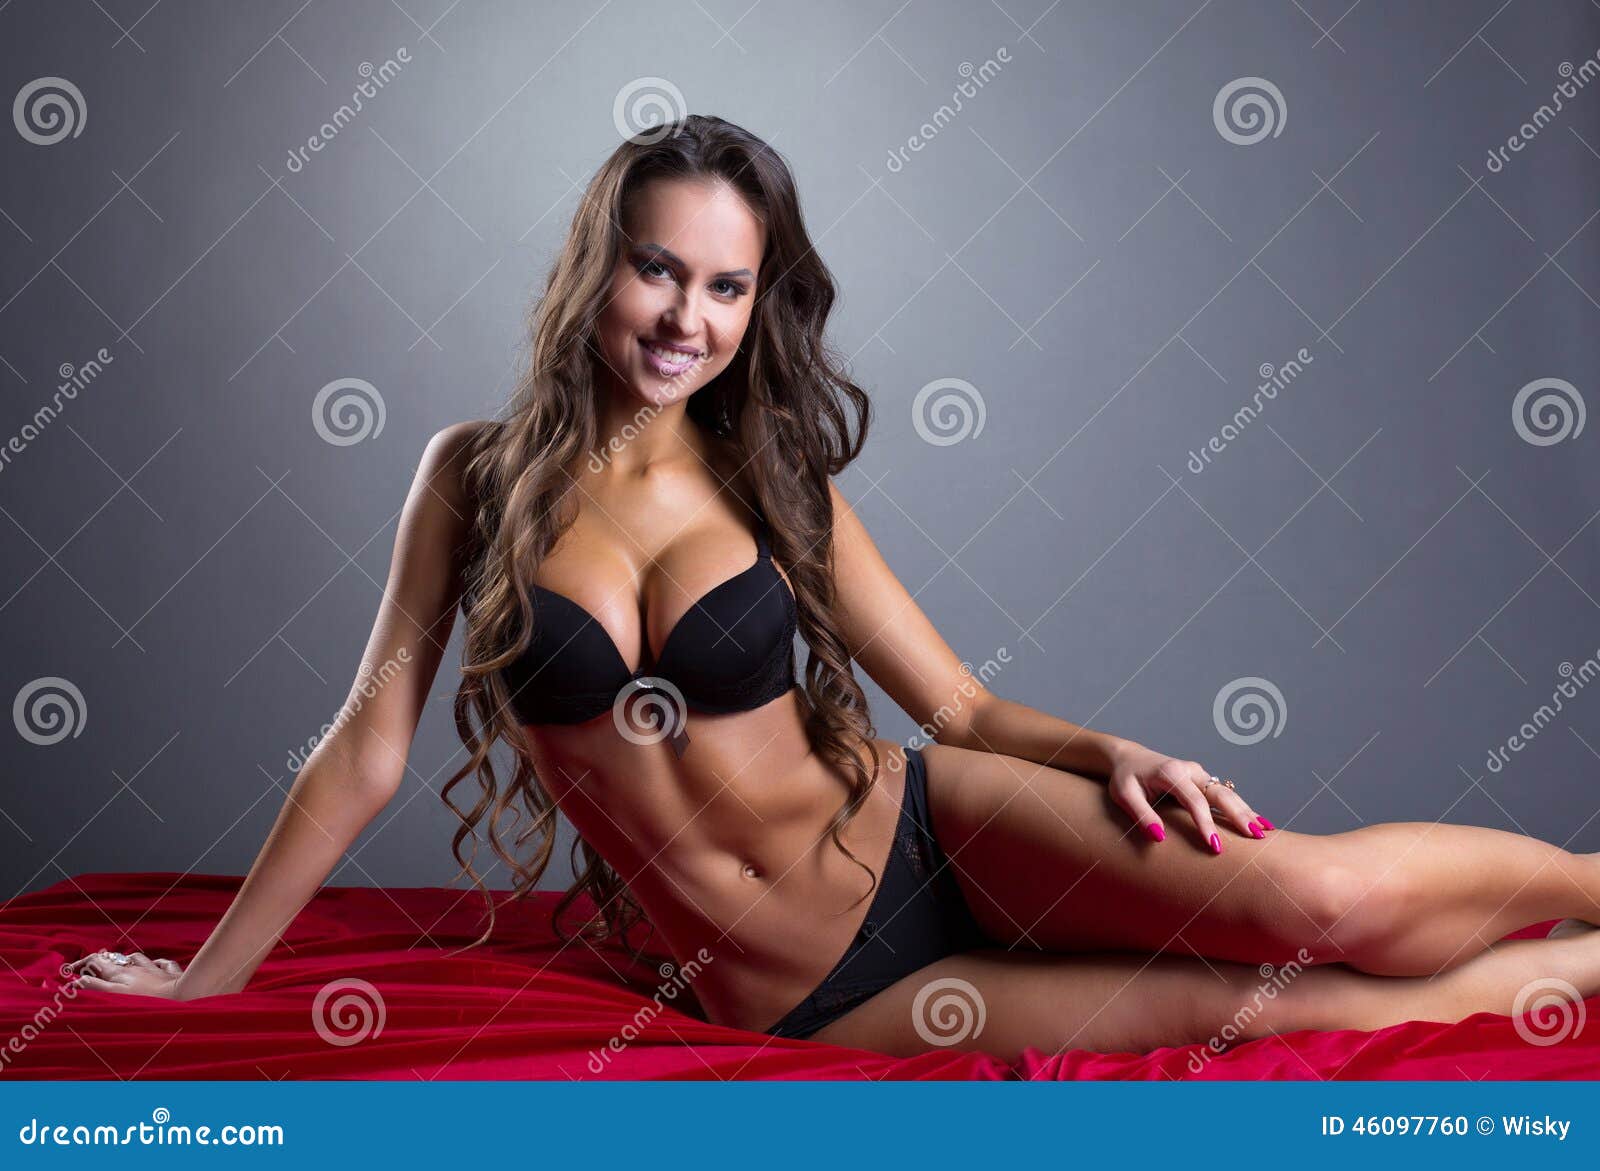 https://thumbs.dreamstime.com/z/smiling-athletic-model-posing-lingerie-gray-backdrop-46097760.jpg